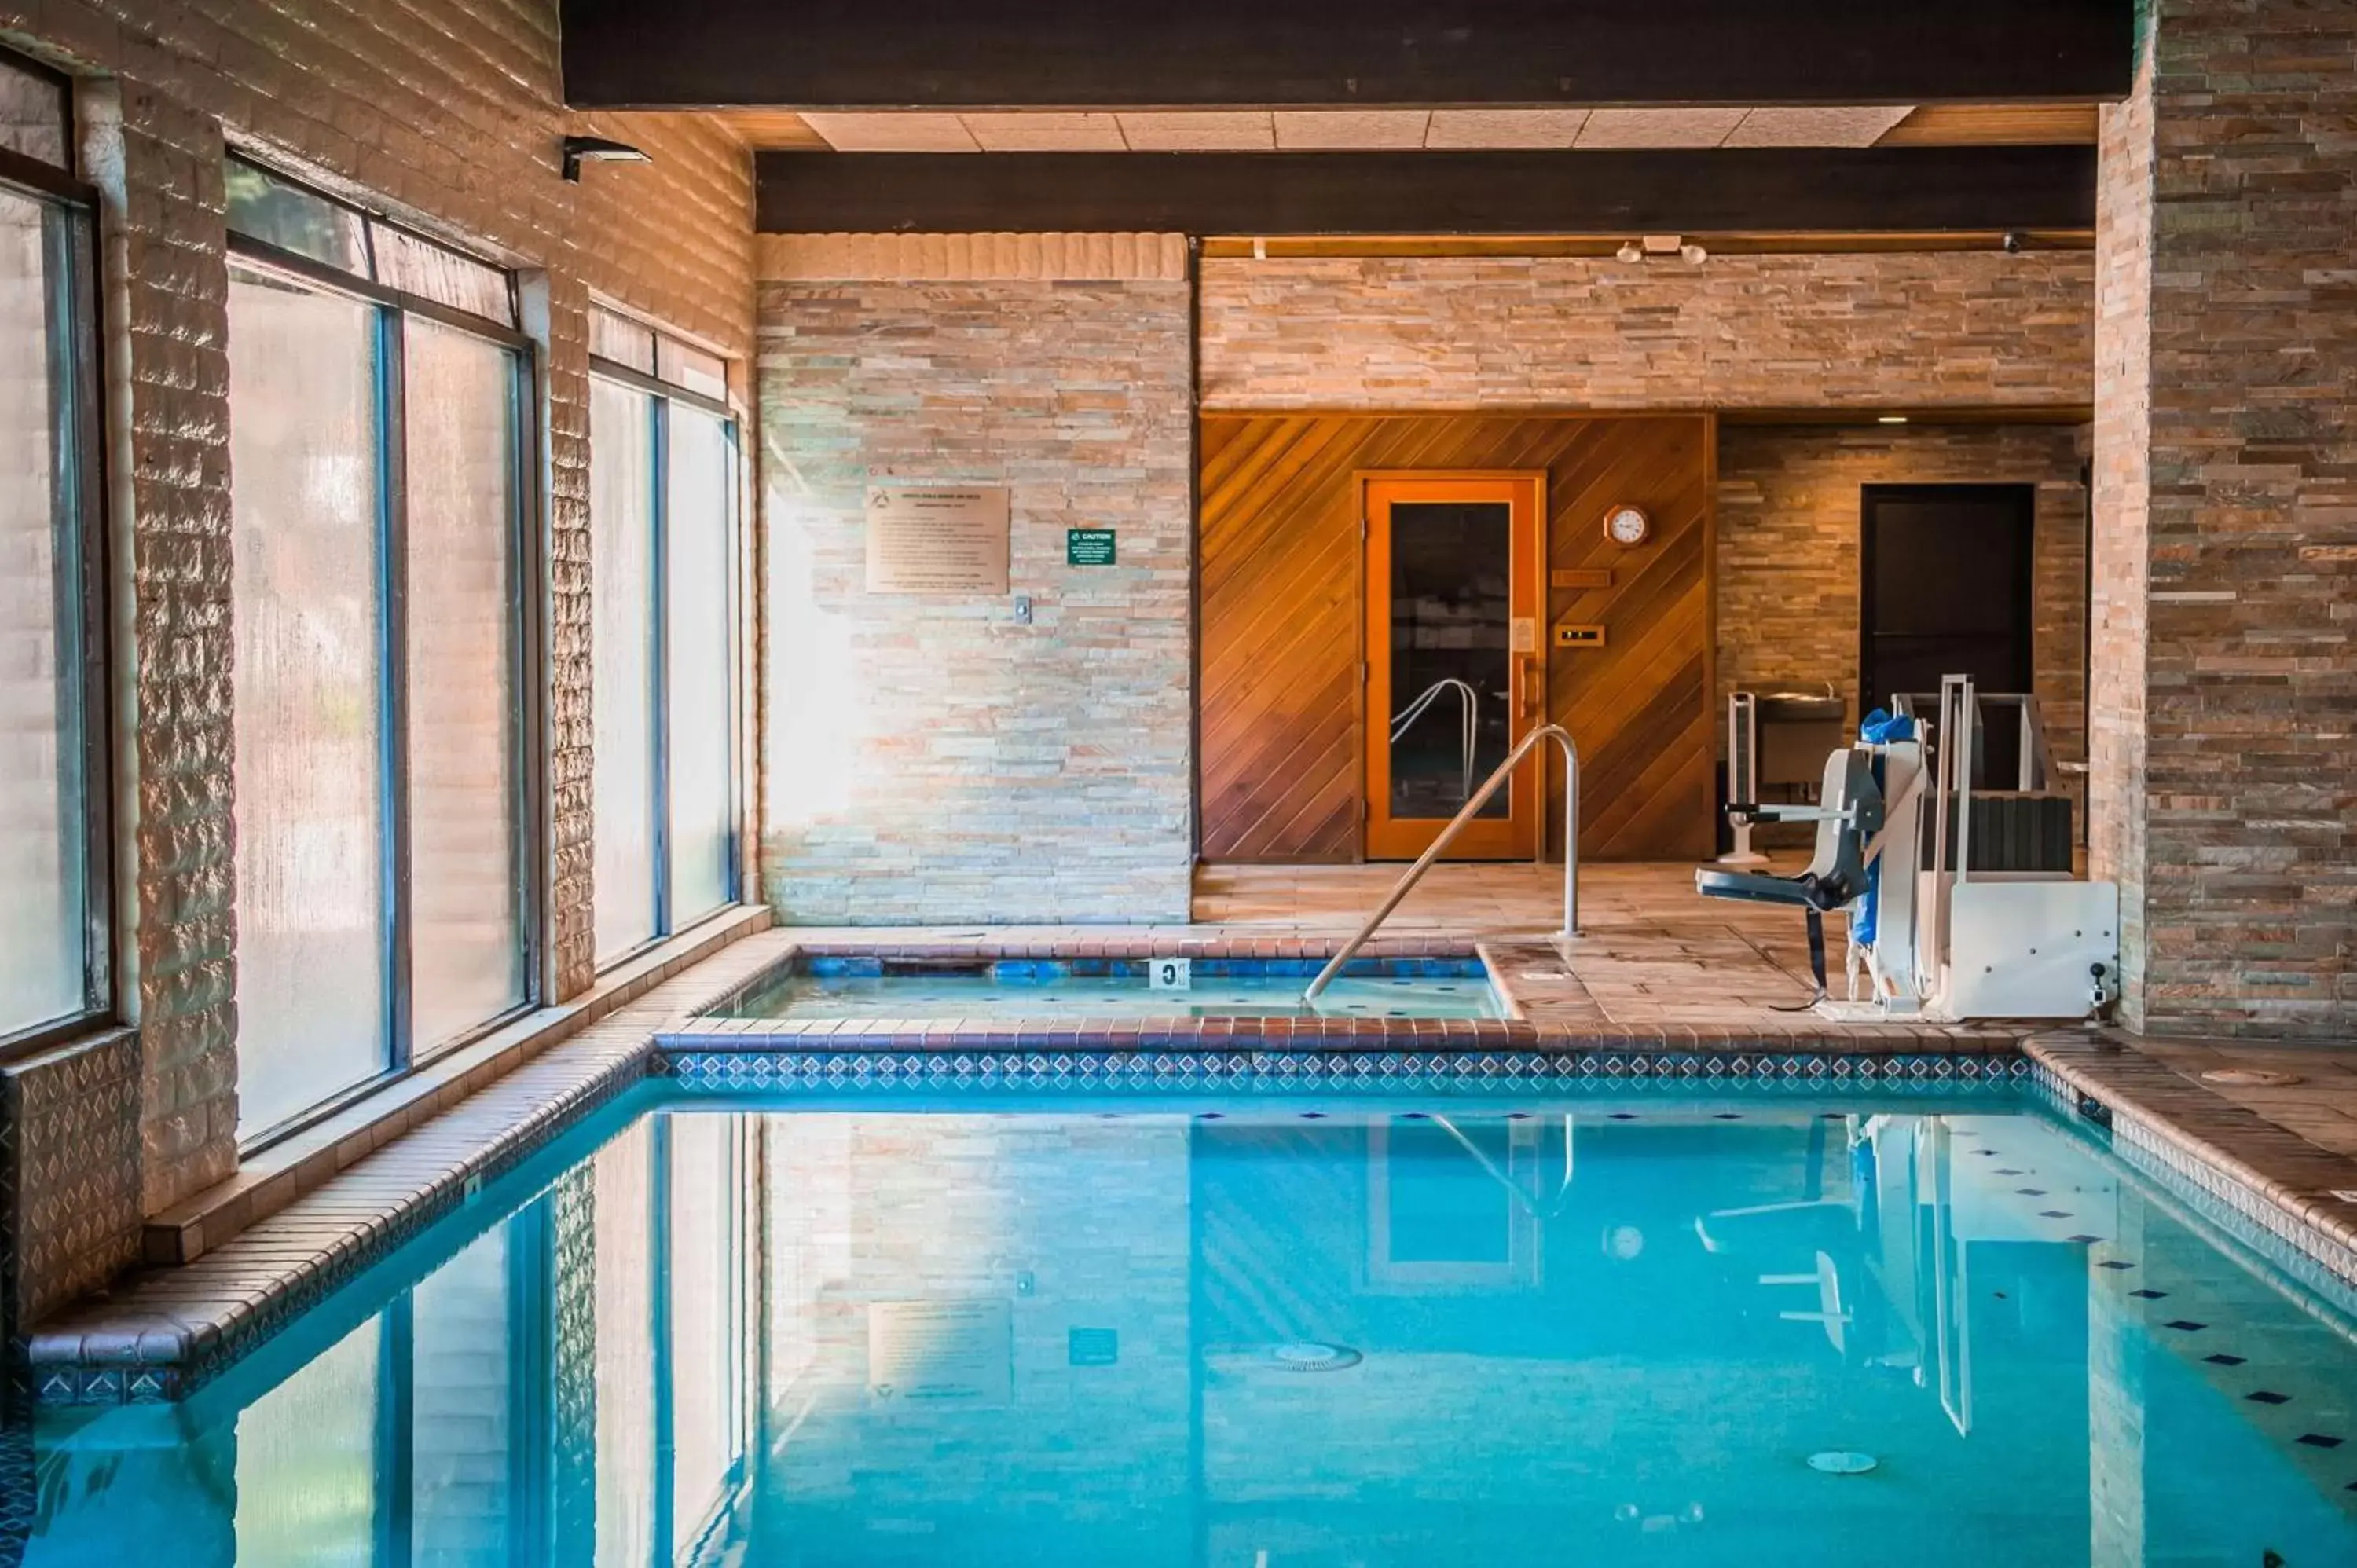 On site, Swimming Pool in Best Western Plus Arroyo Roble Hotel & Creekside Villas